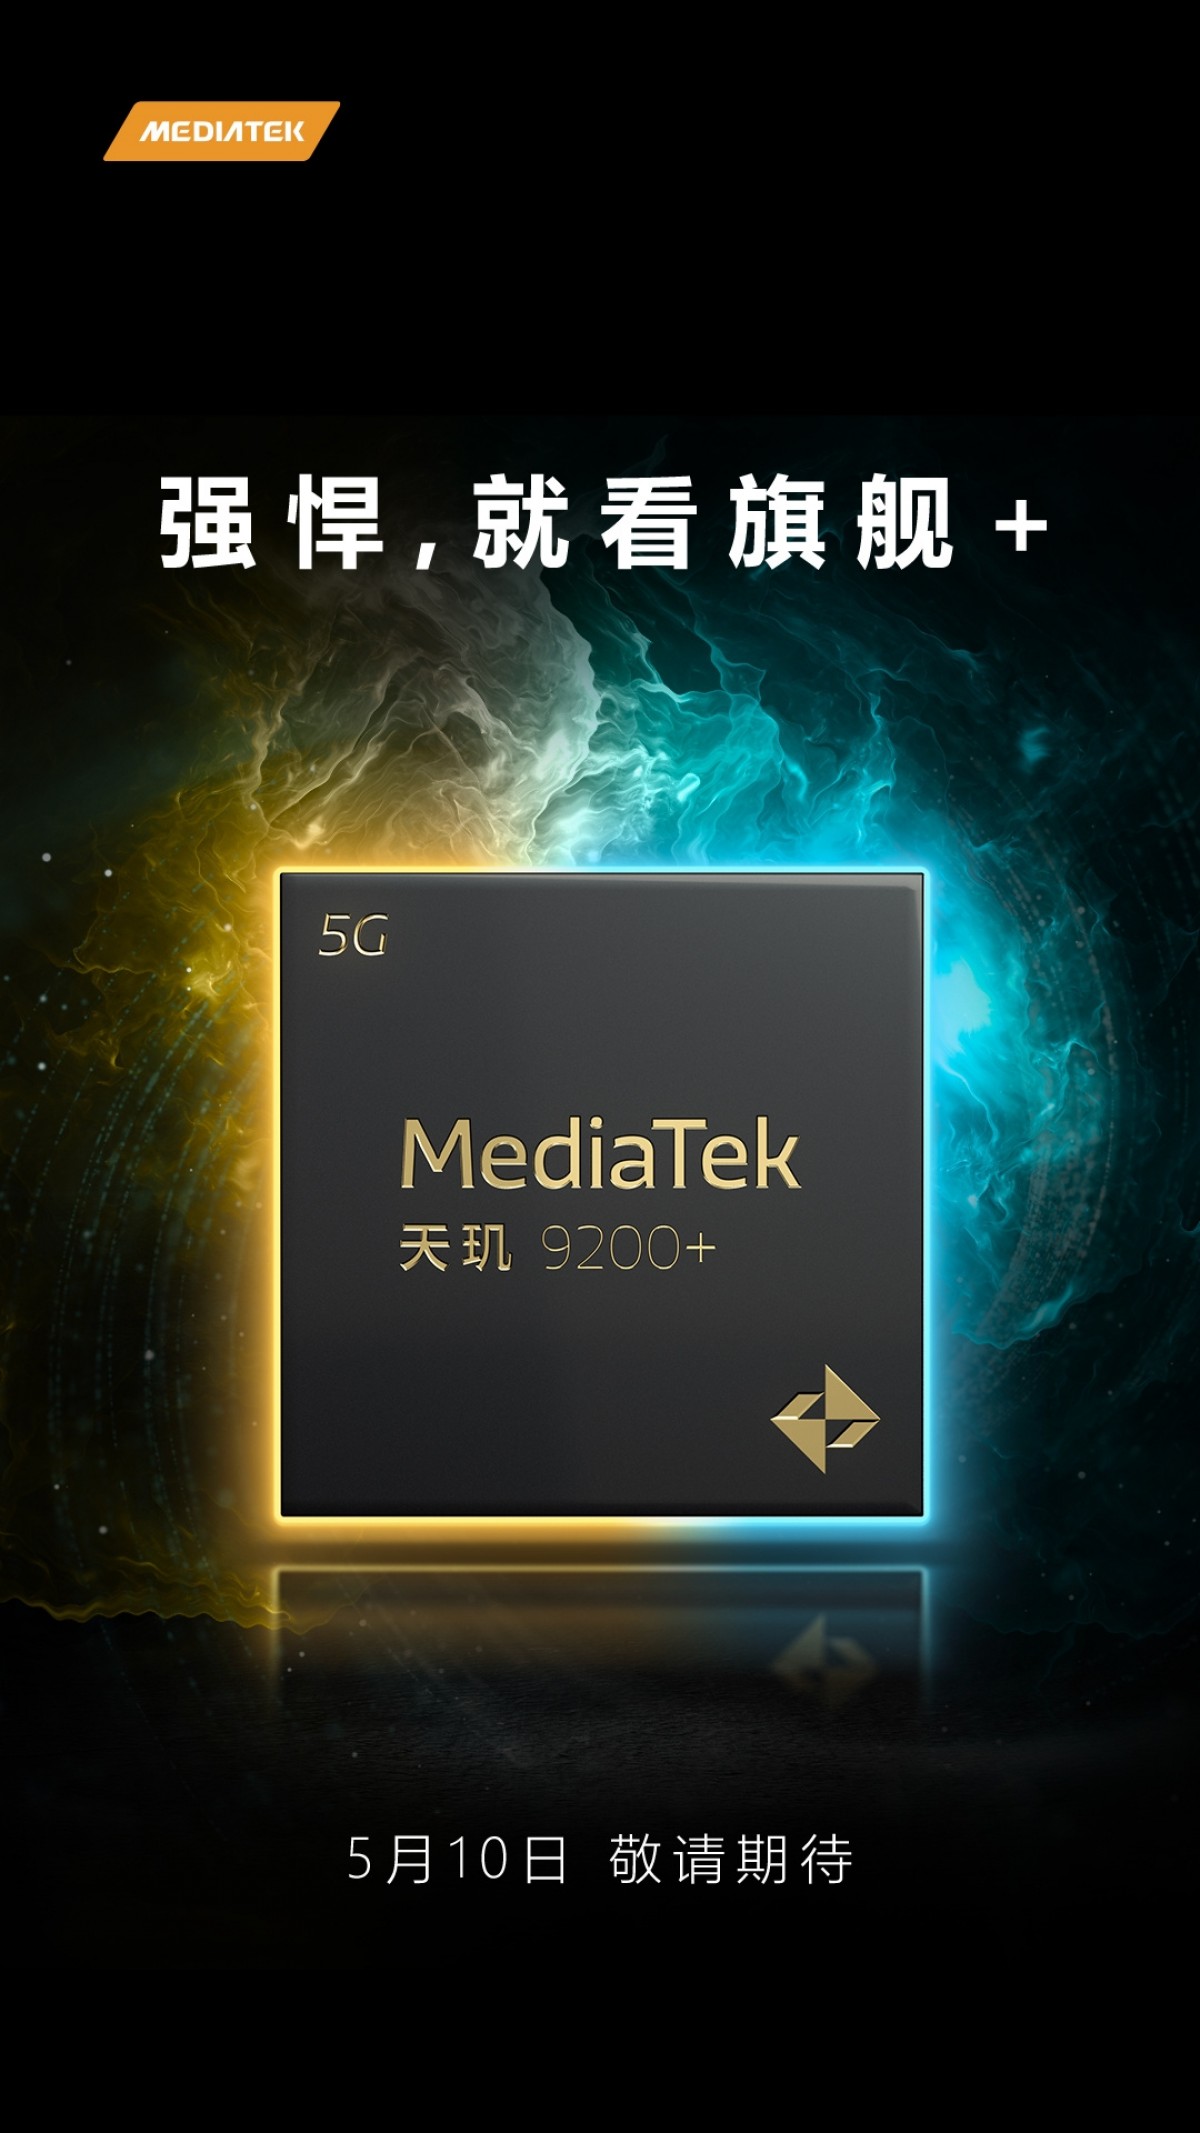 Mediatek will unveil Dimensity 9200+ on May 10